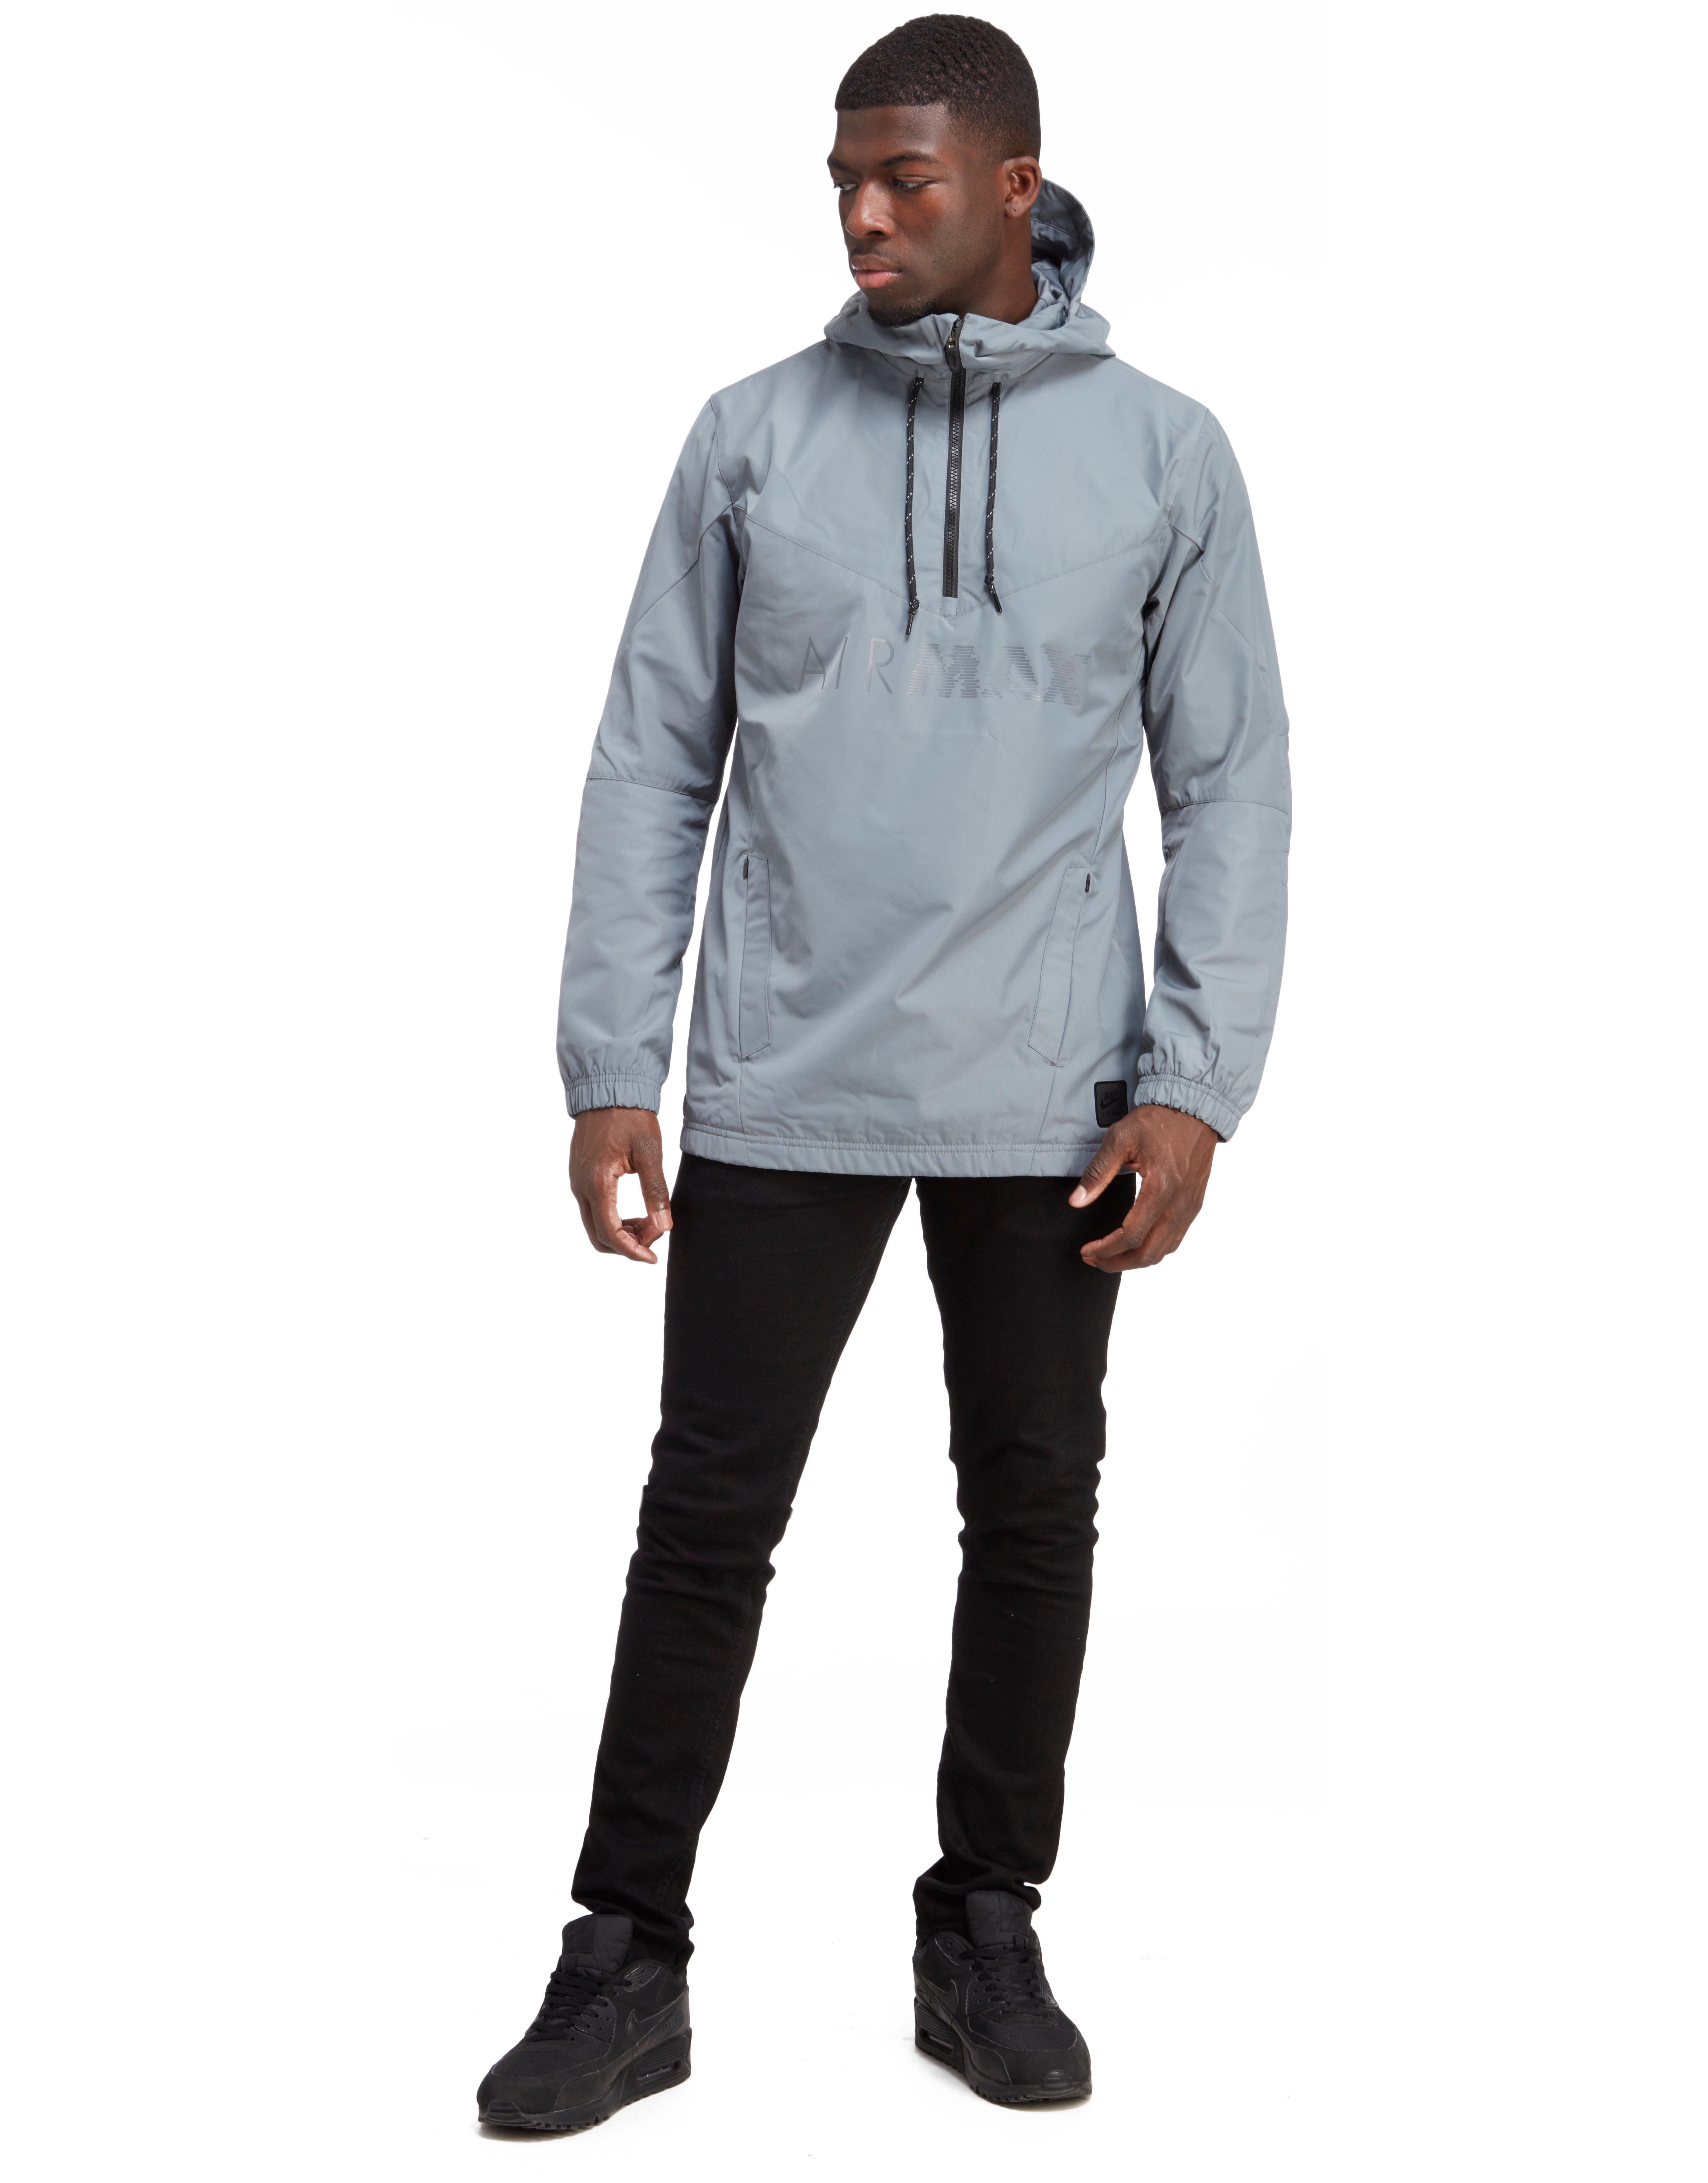 Nike Synthetic Air Max Half Zip Chevron Jacket in Grey (Gray) for Men - Lyst